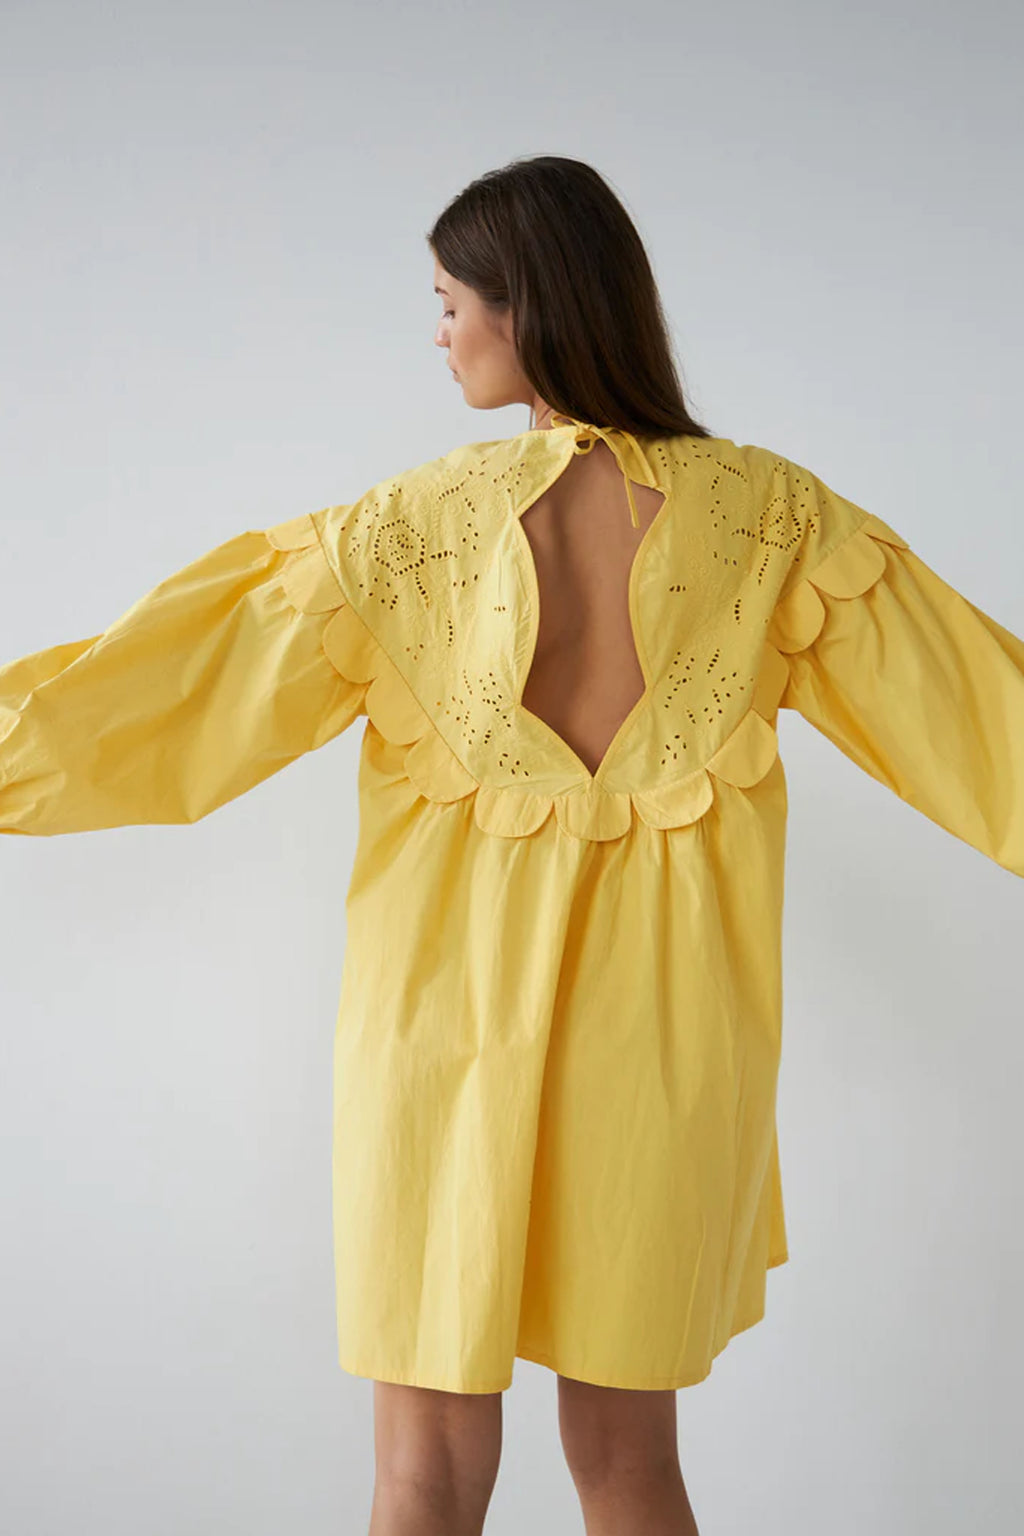 Stella Nova Embroidery Anglaise Sweet Yellow Mini Dress - The Mercantile London